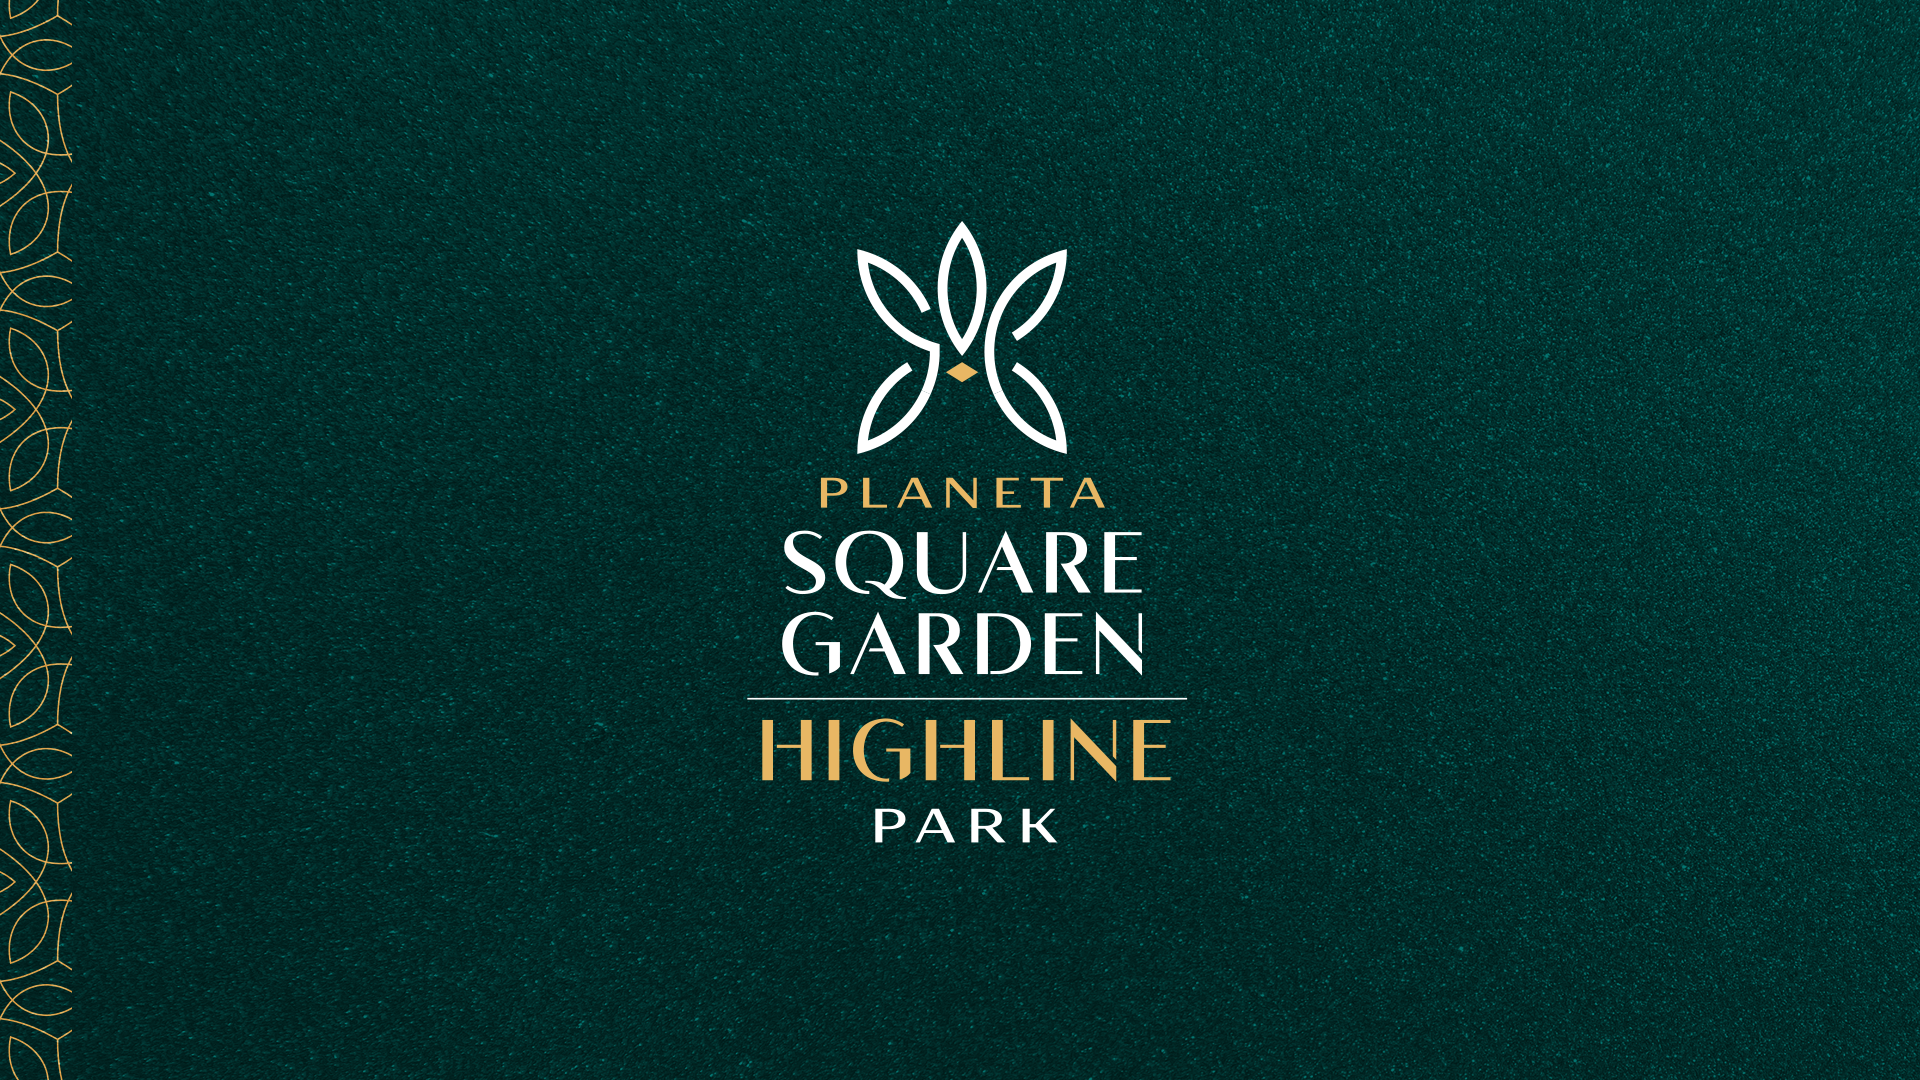 Square Garden - Atendimento Especializado (11) 4116-9995 | 98026-0864